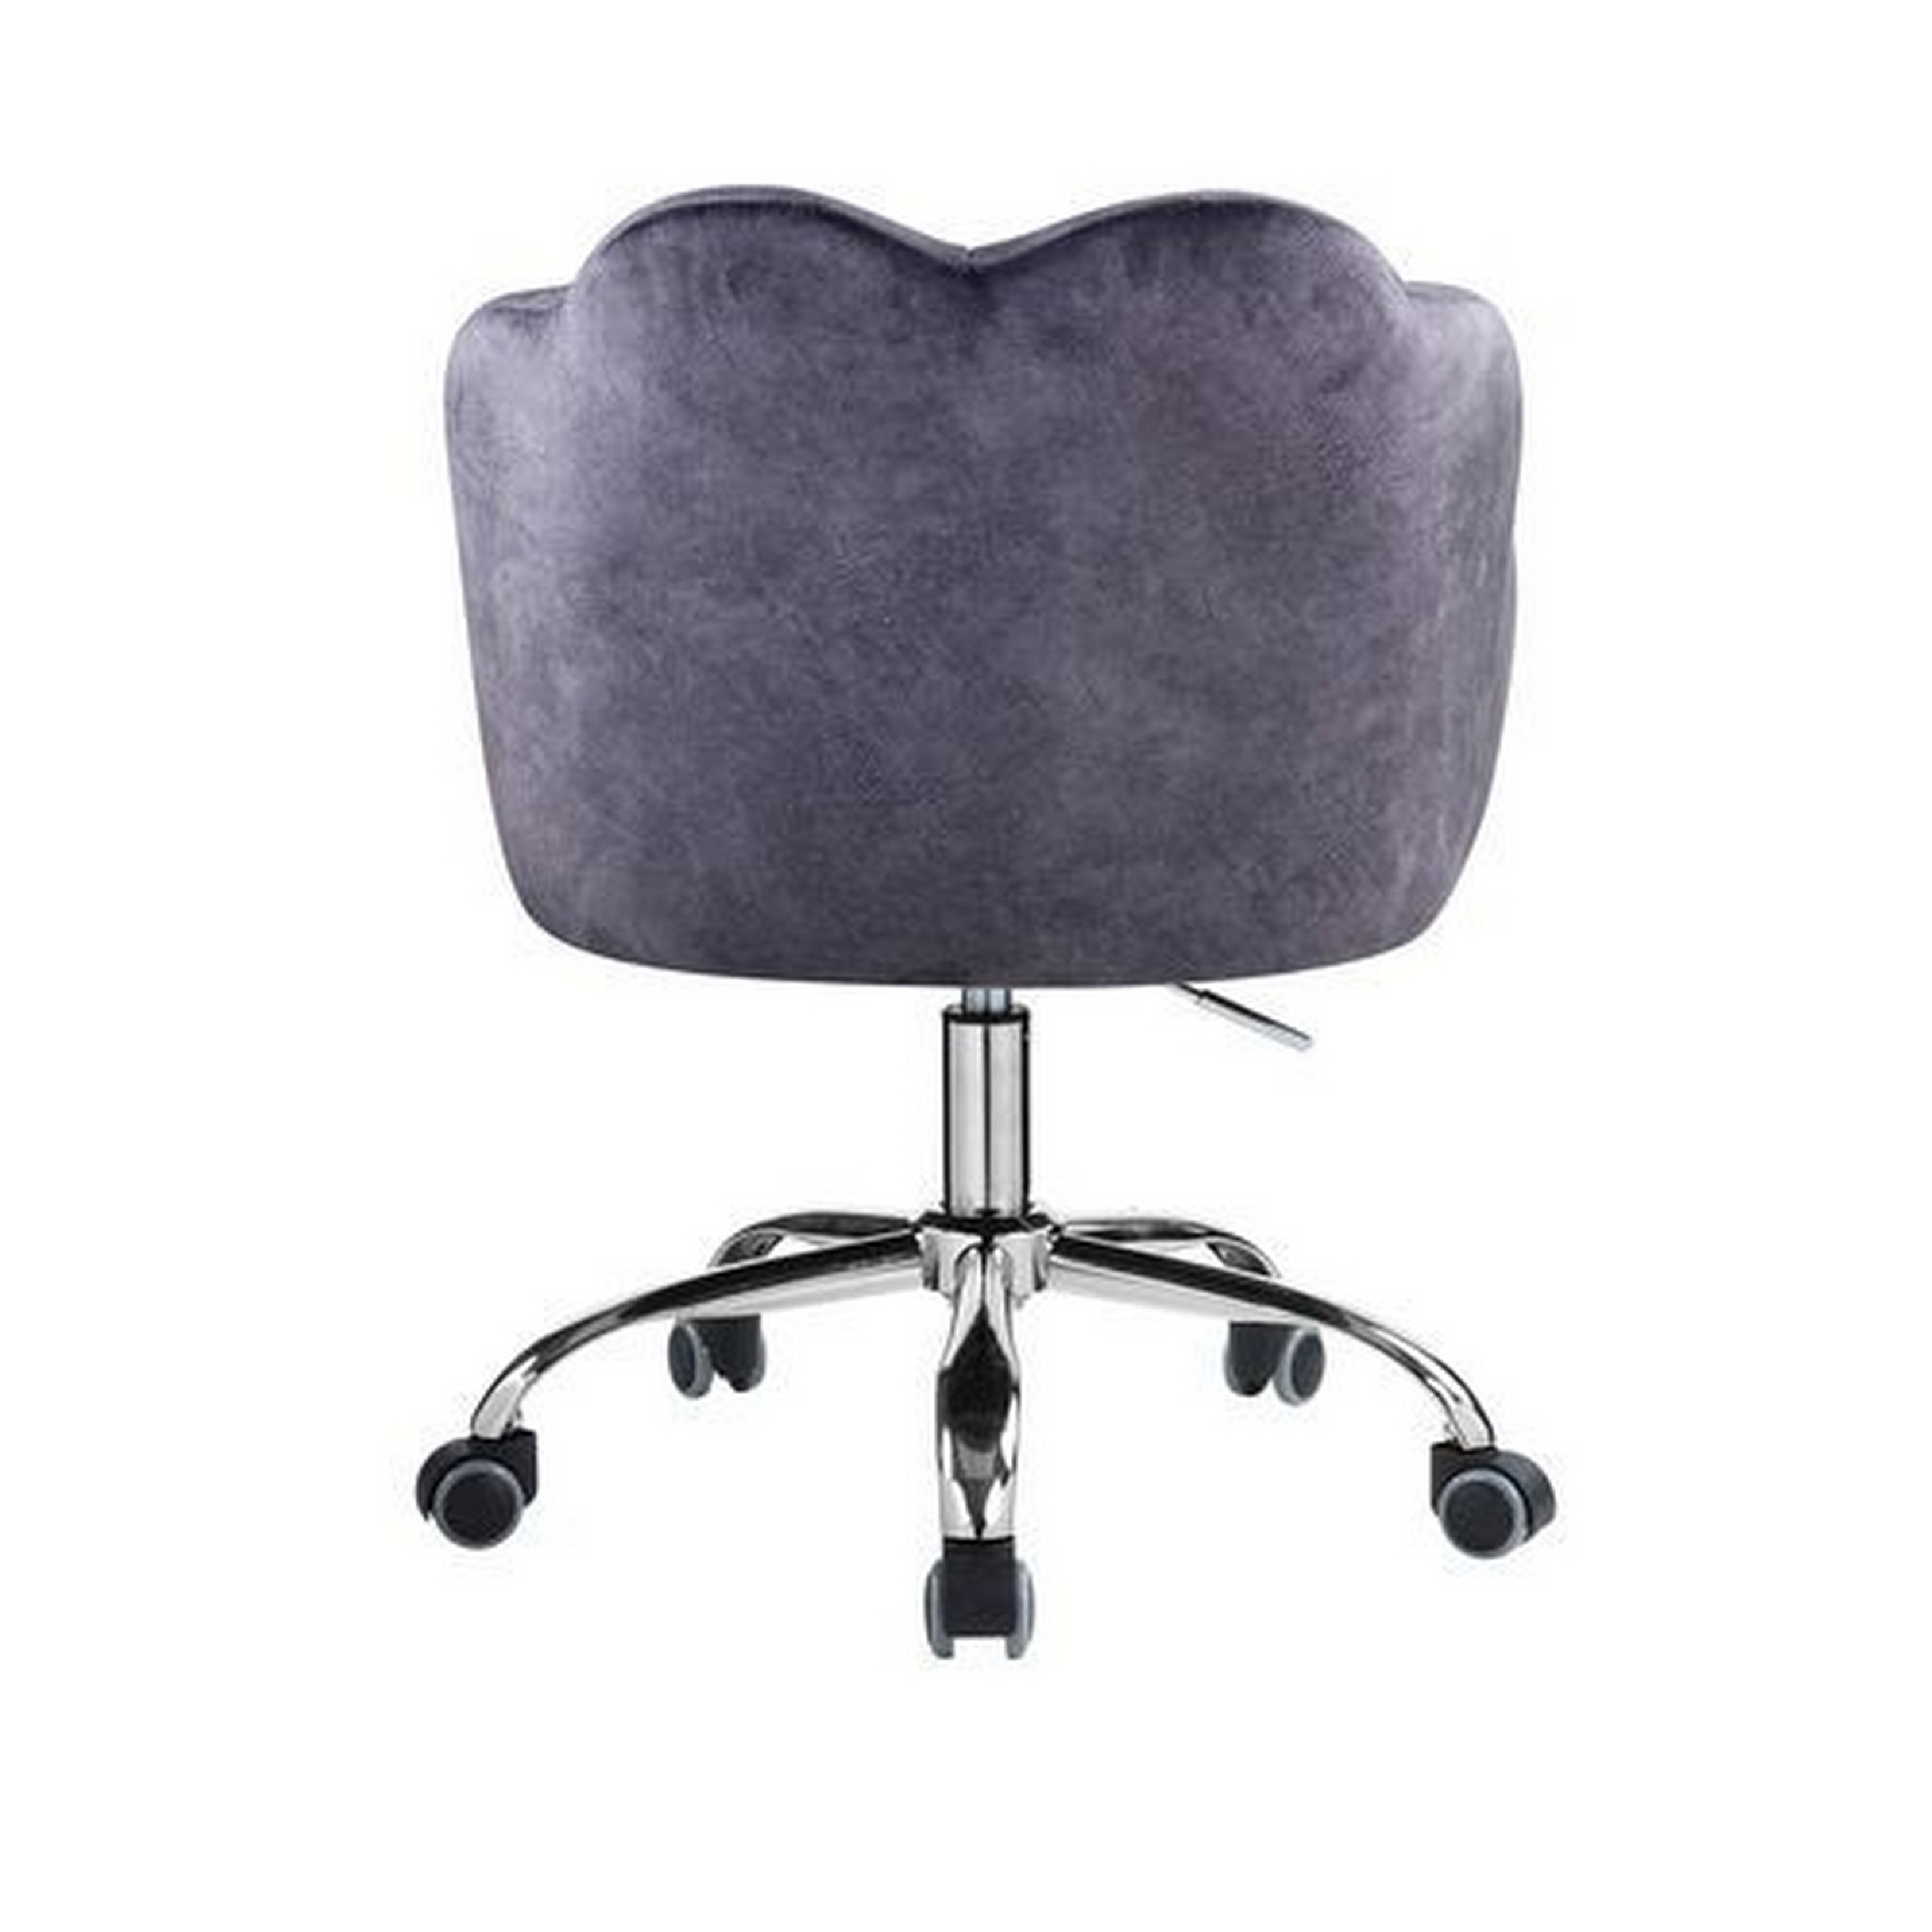 Swivel Office Chair With Shell Design Backrest, Gray And Chrome- Saltoro Sherpi